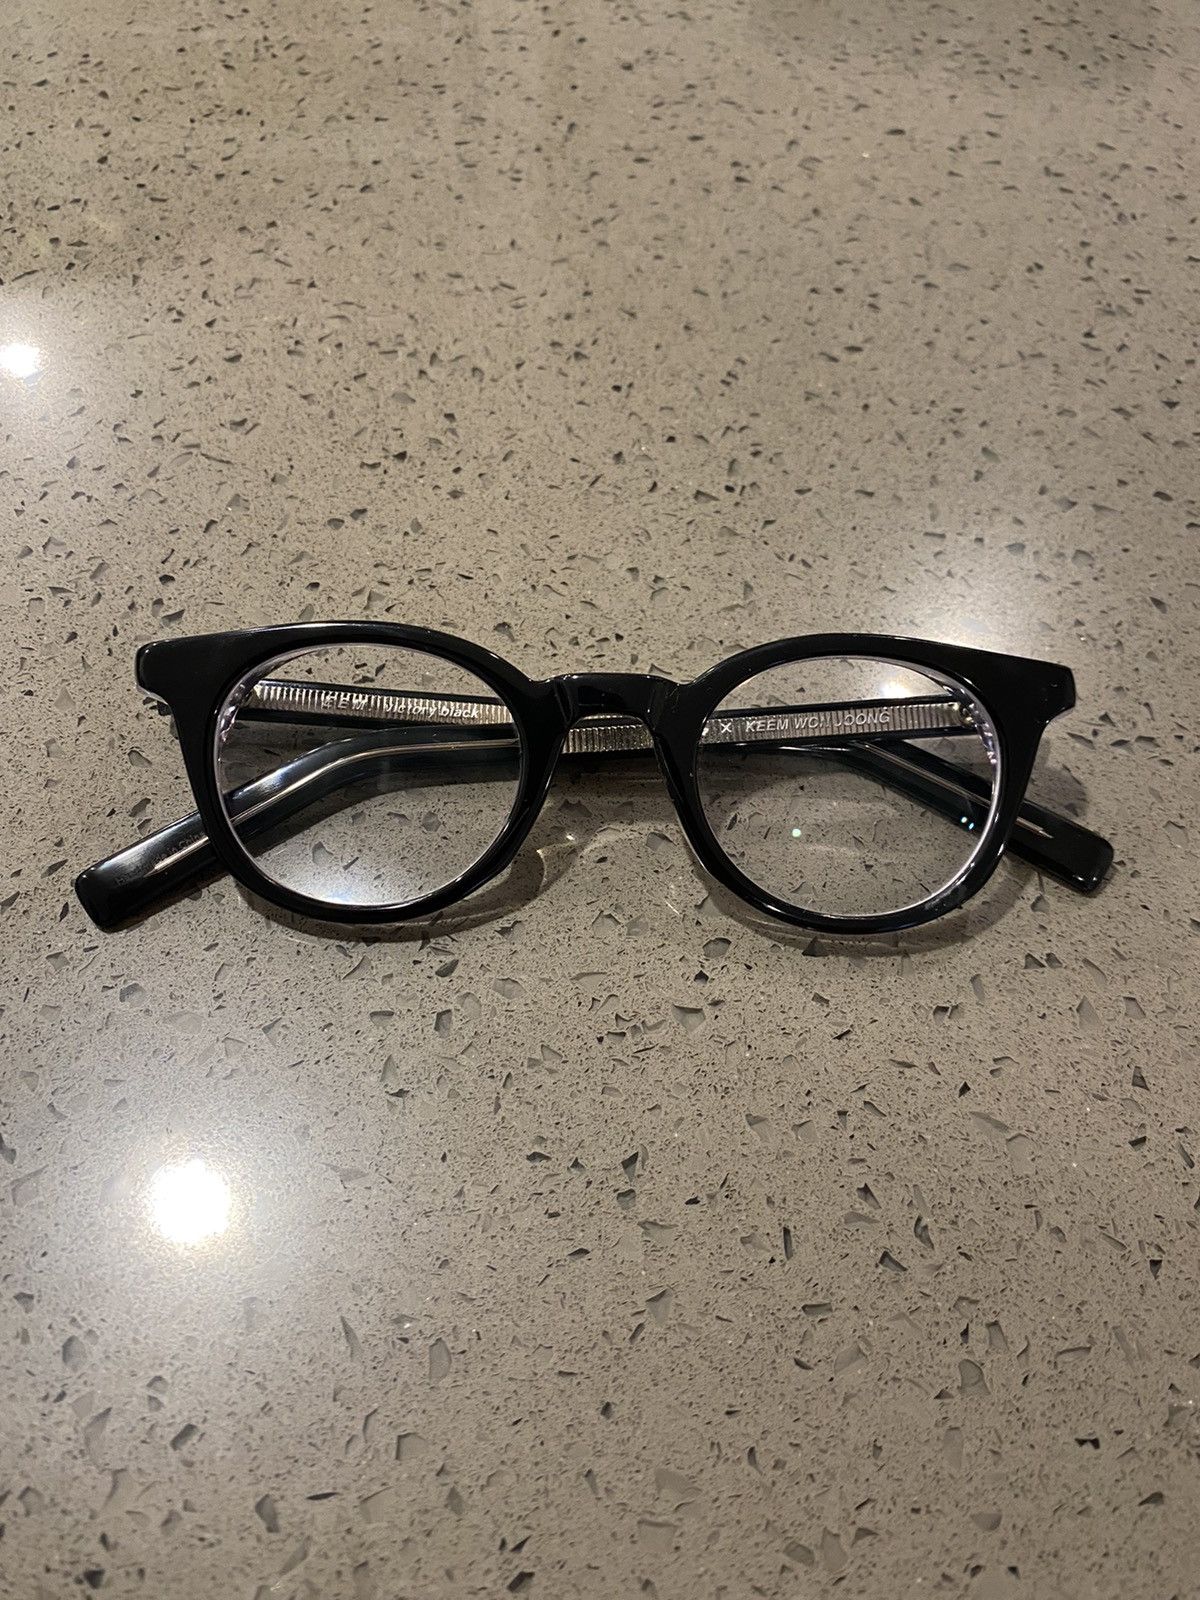 Other Fakeme X Keem Won Joong EEM Eyeglasses | Grailed